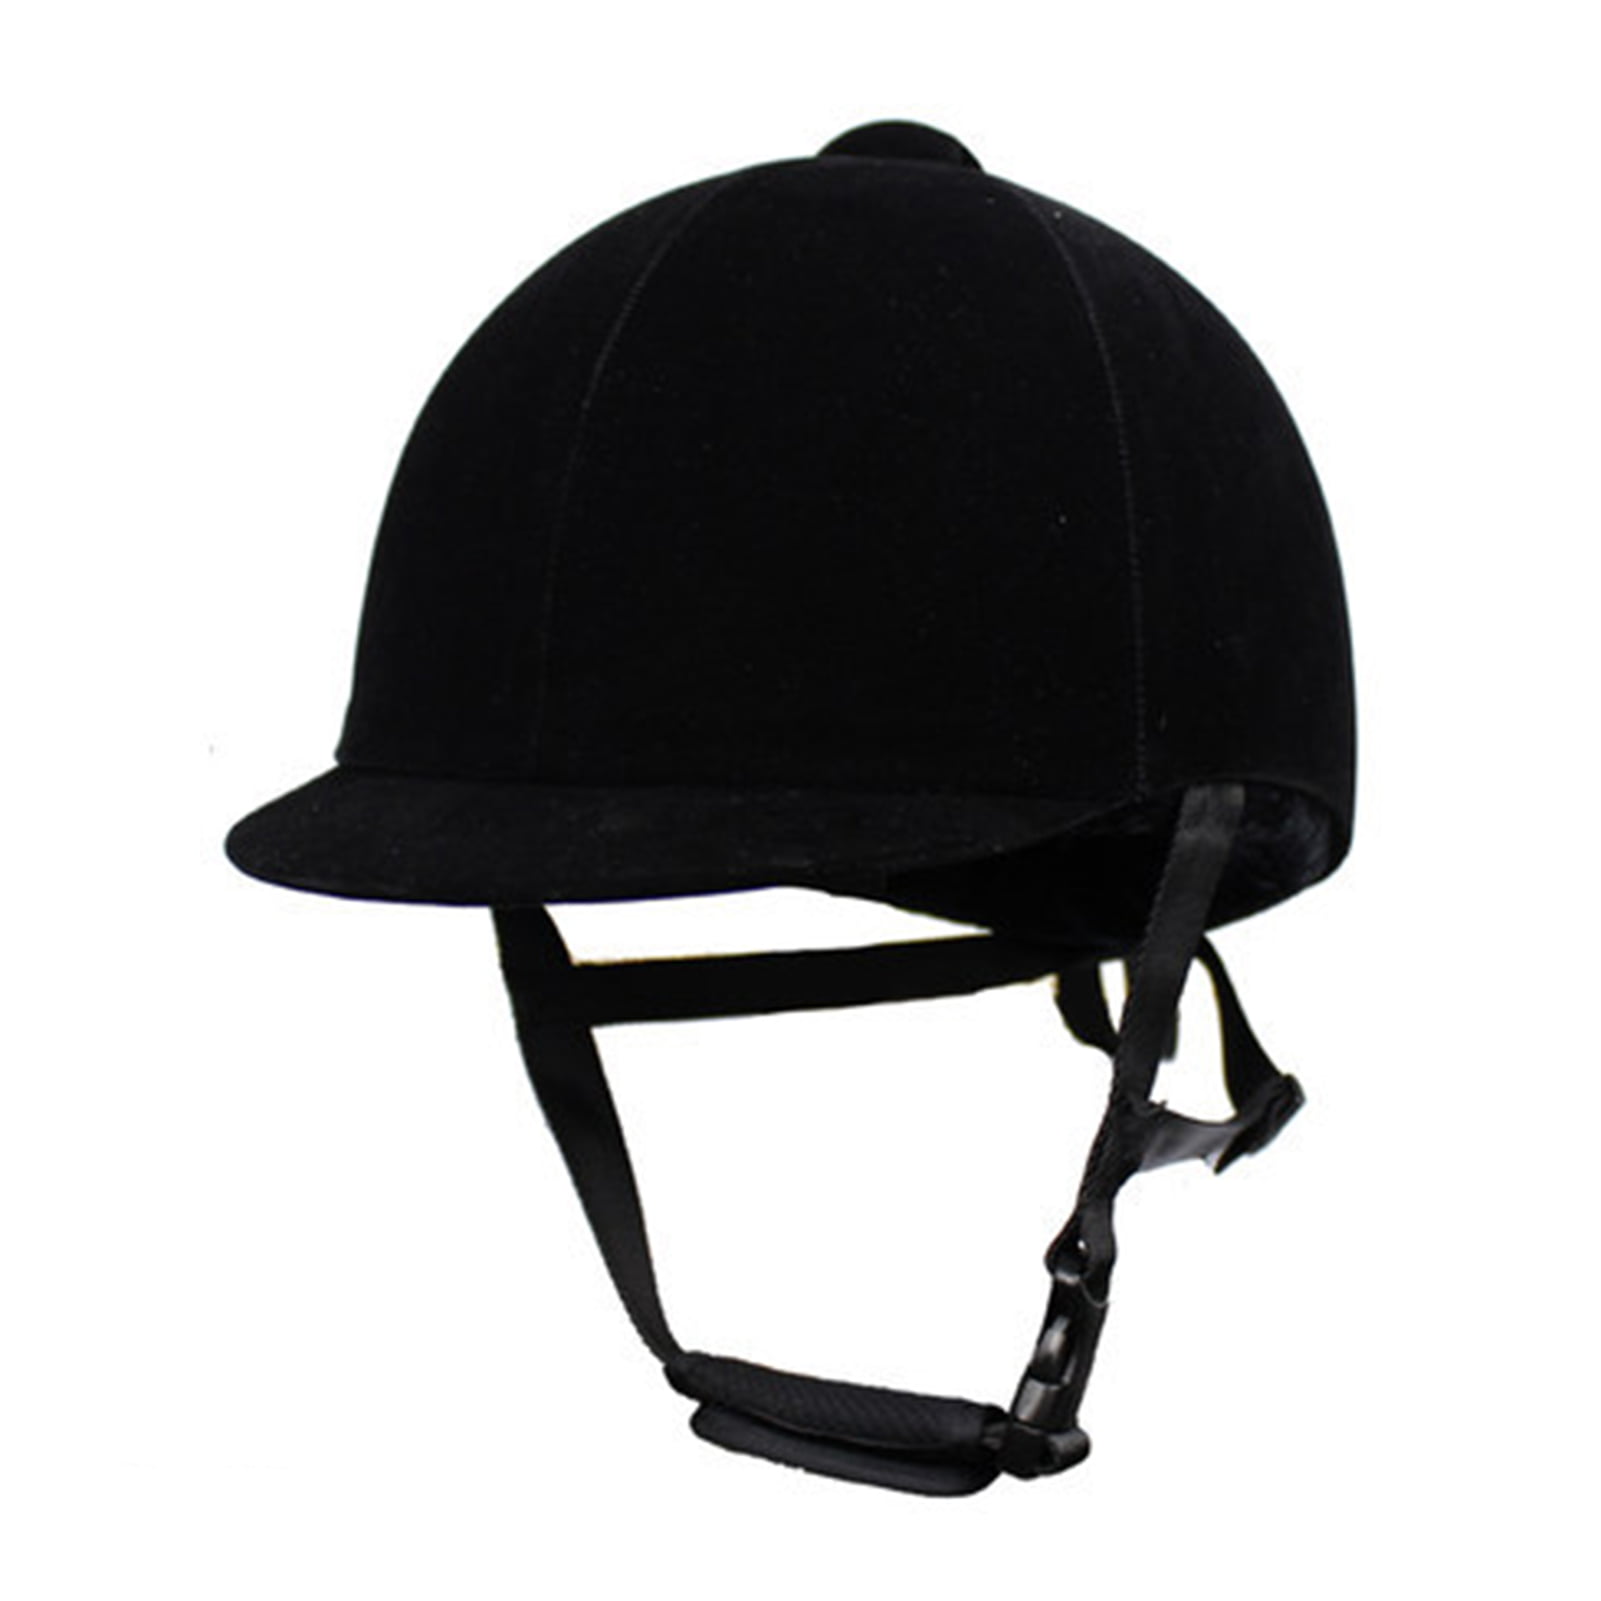 Equestrian Helmet Horse Riding Cover Hat Black Velvet with Air Vent S/M/L 